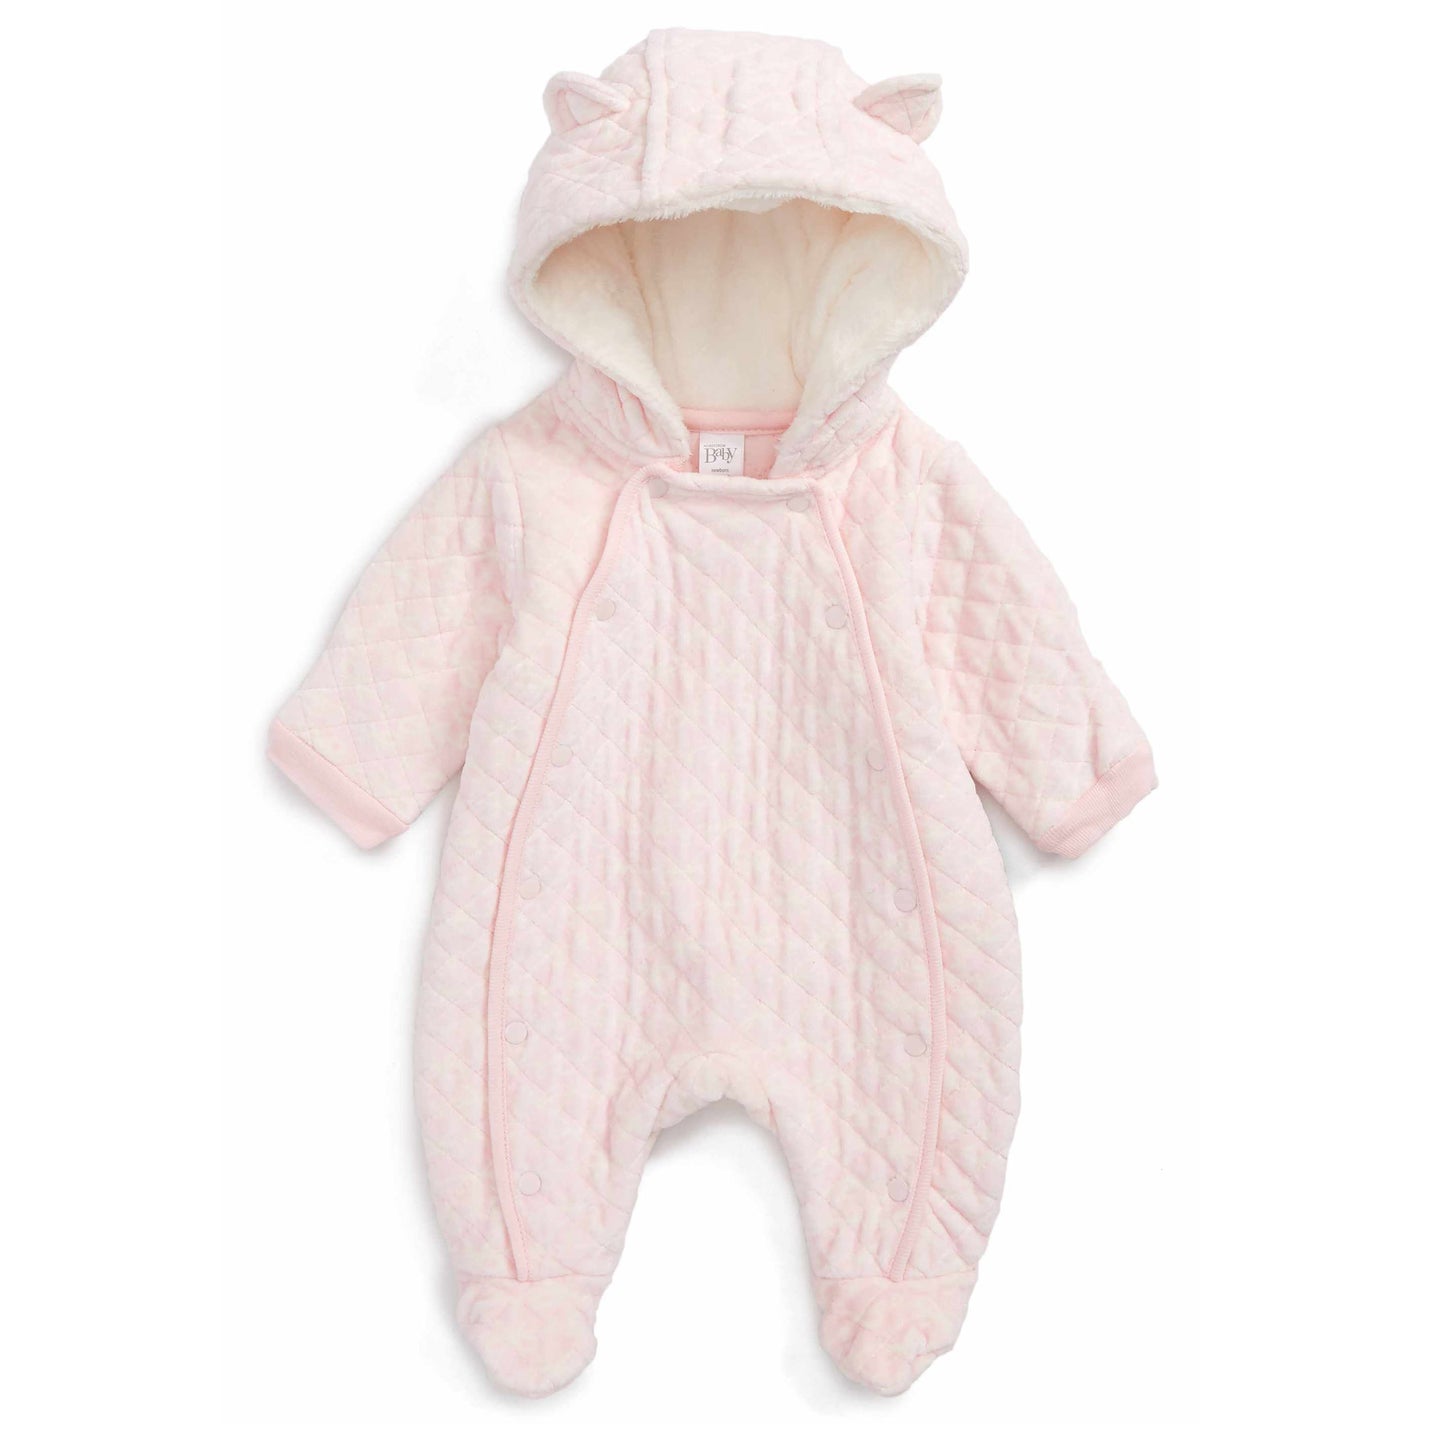 [newborn] Nordstrom Baby Bunting Suit - Pink